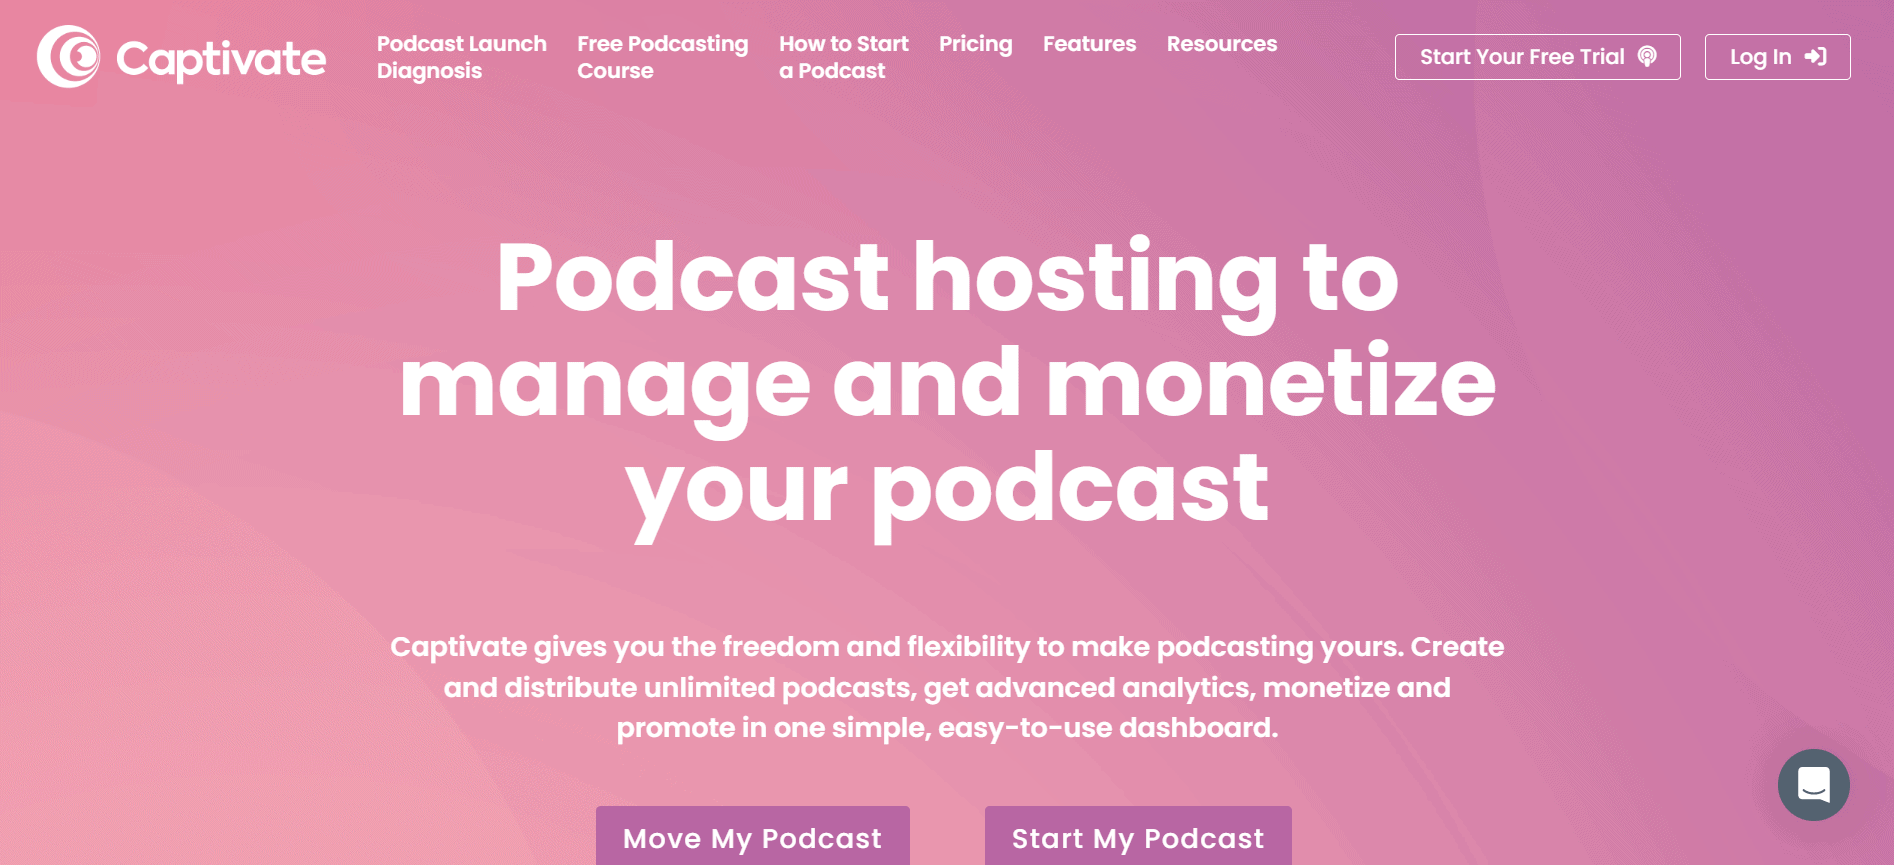 Captivate - Best Podcast Hosting Provider